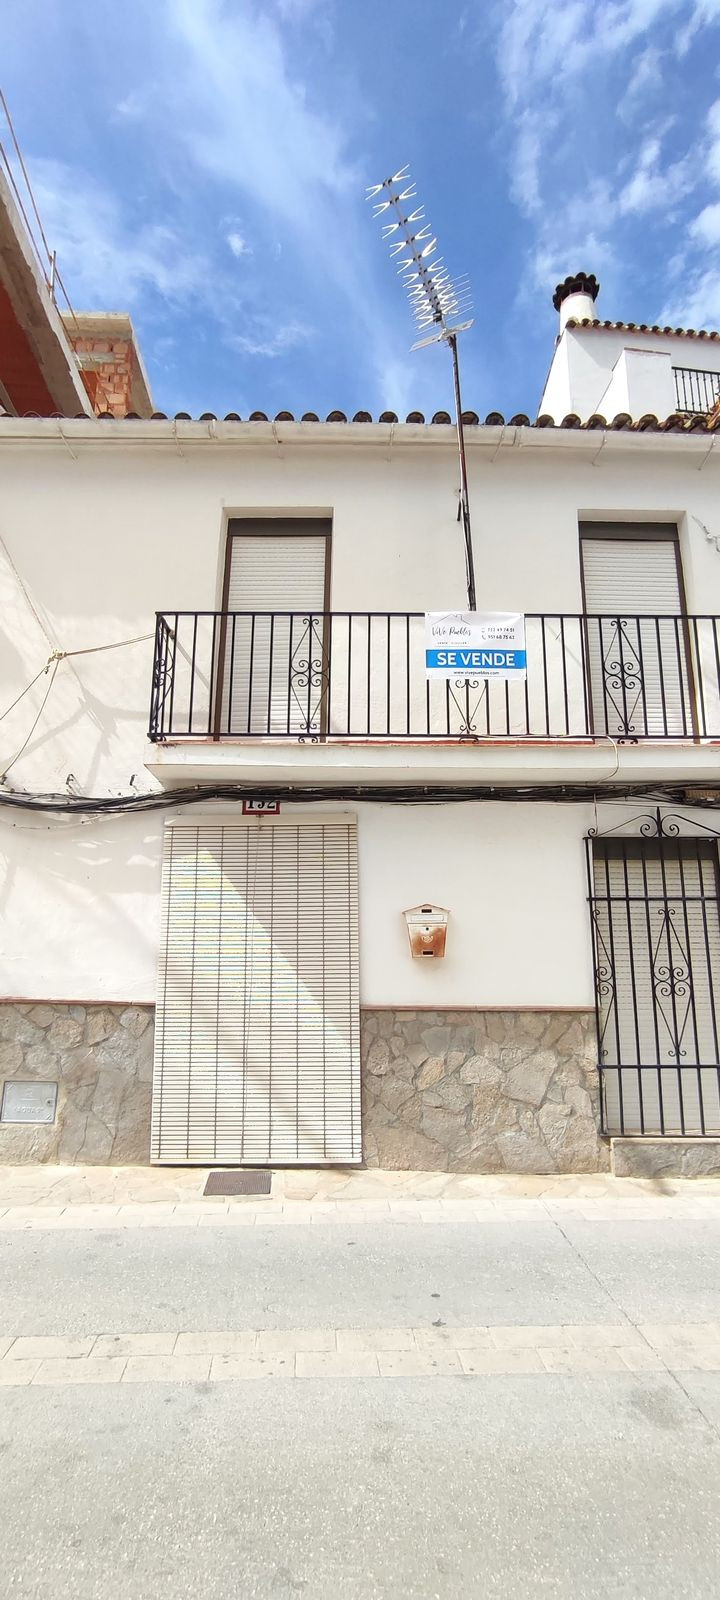 						Townhouse  Semi Detached
													for sale 
																			 in Gaucín
					